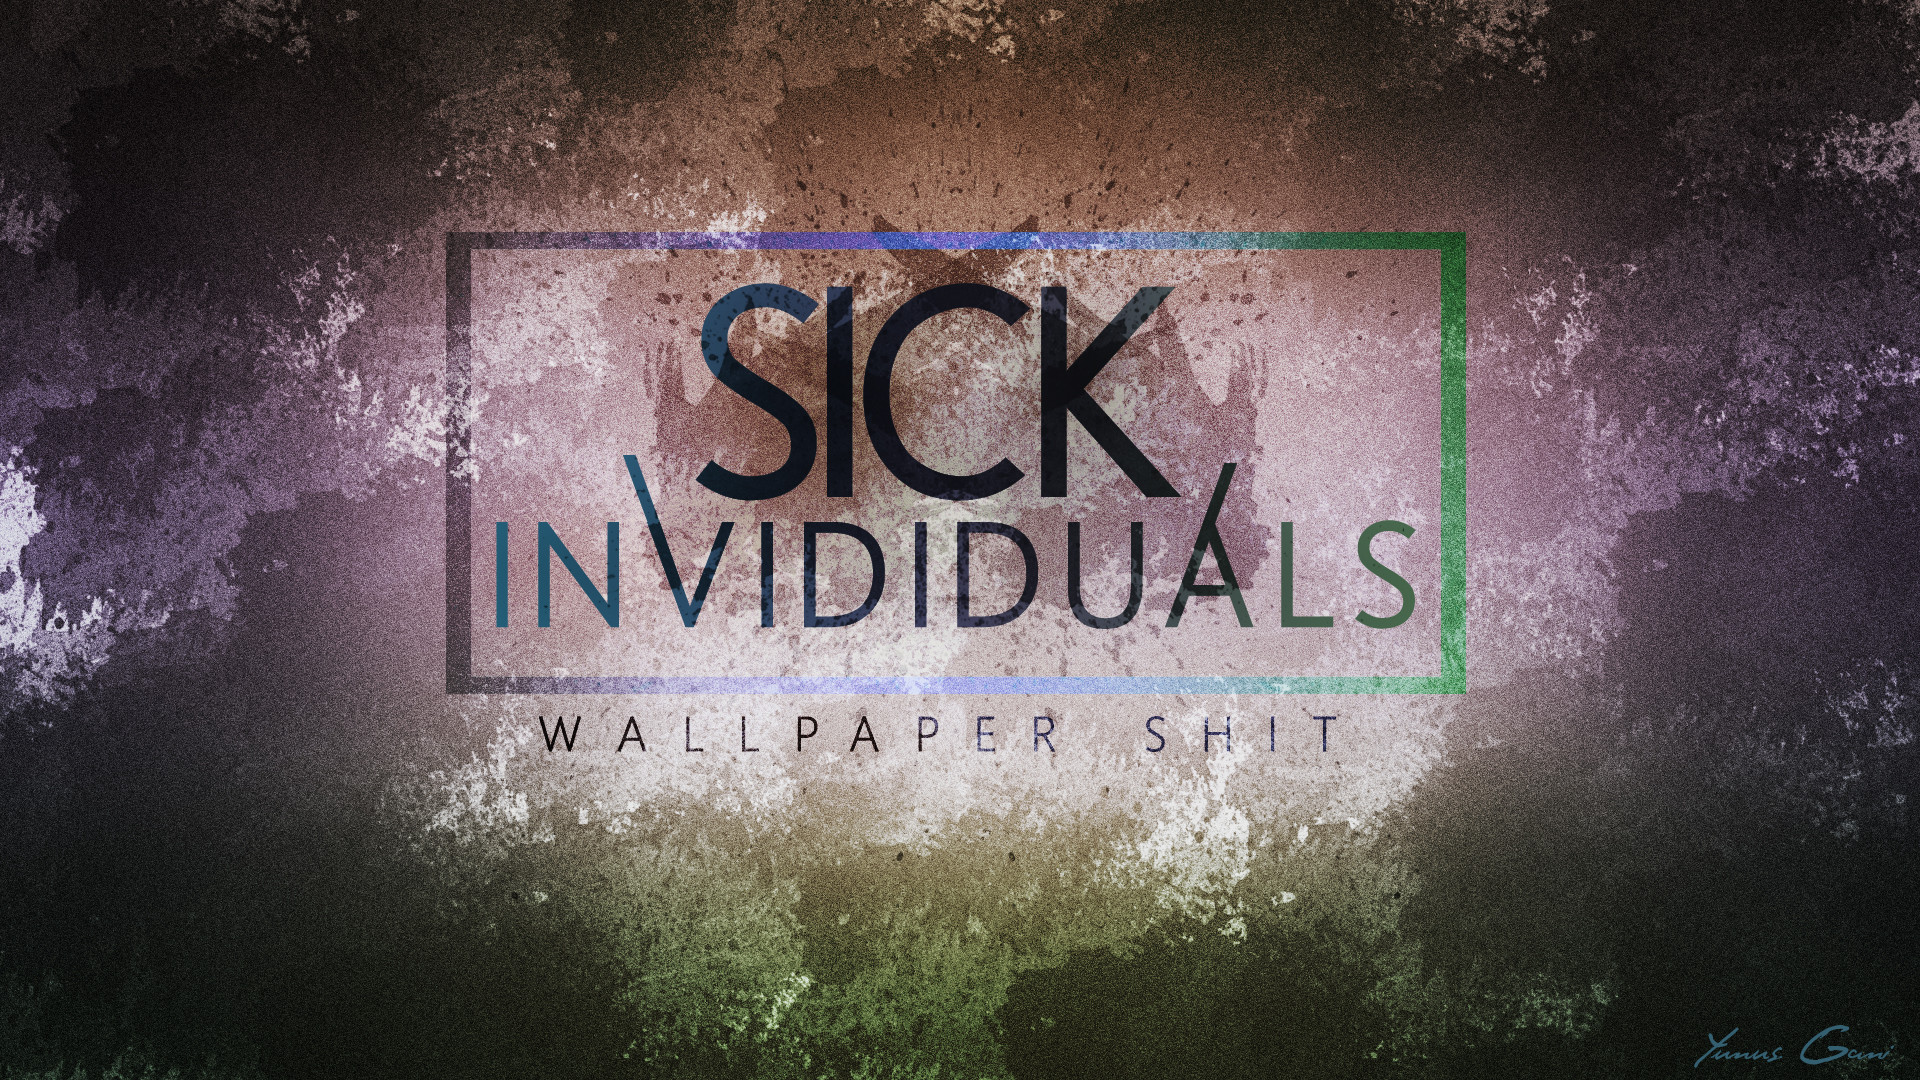 Wallpaper Shit VOL1 – Sick Individuals Wallpaper by ProfONE